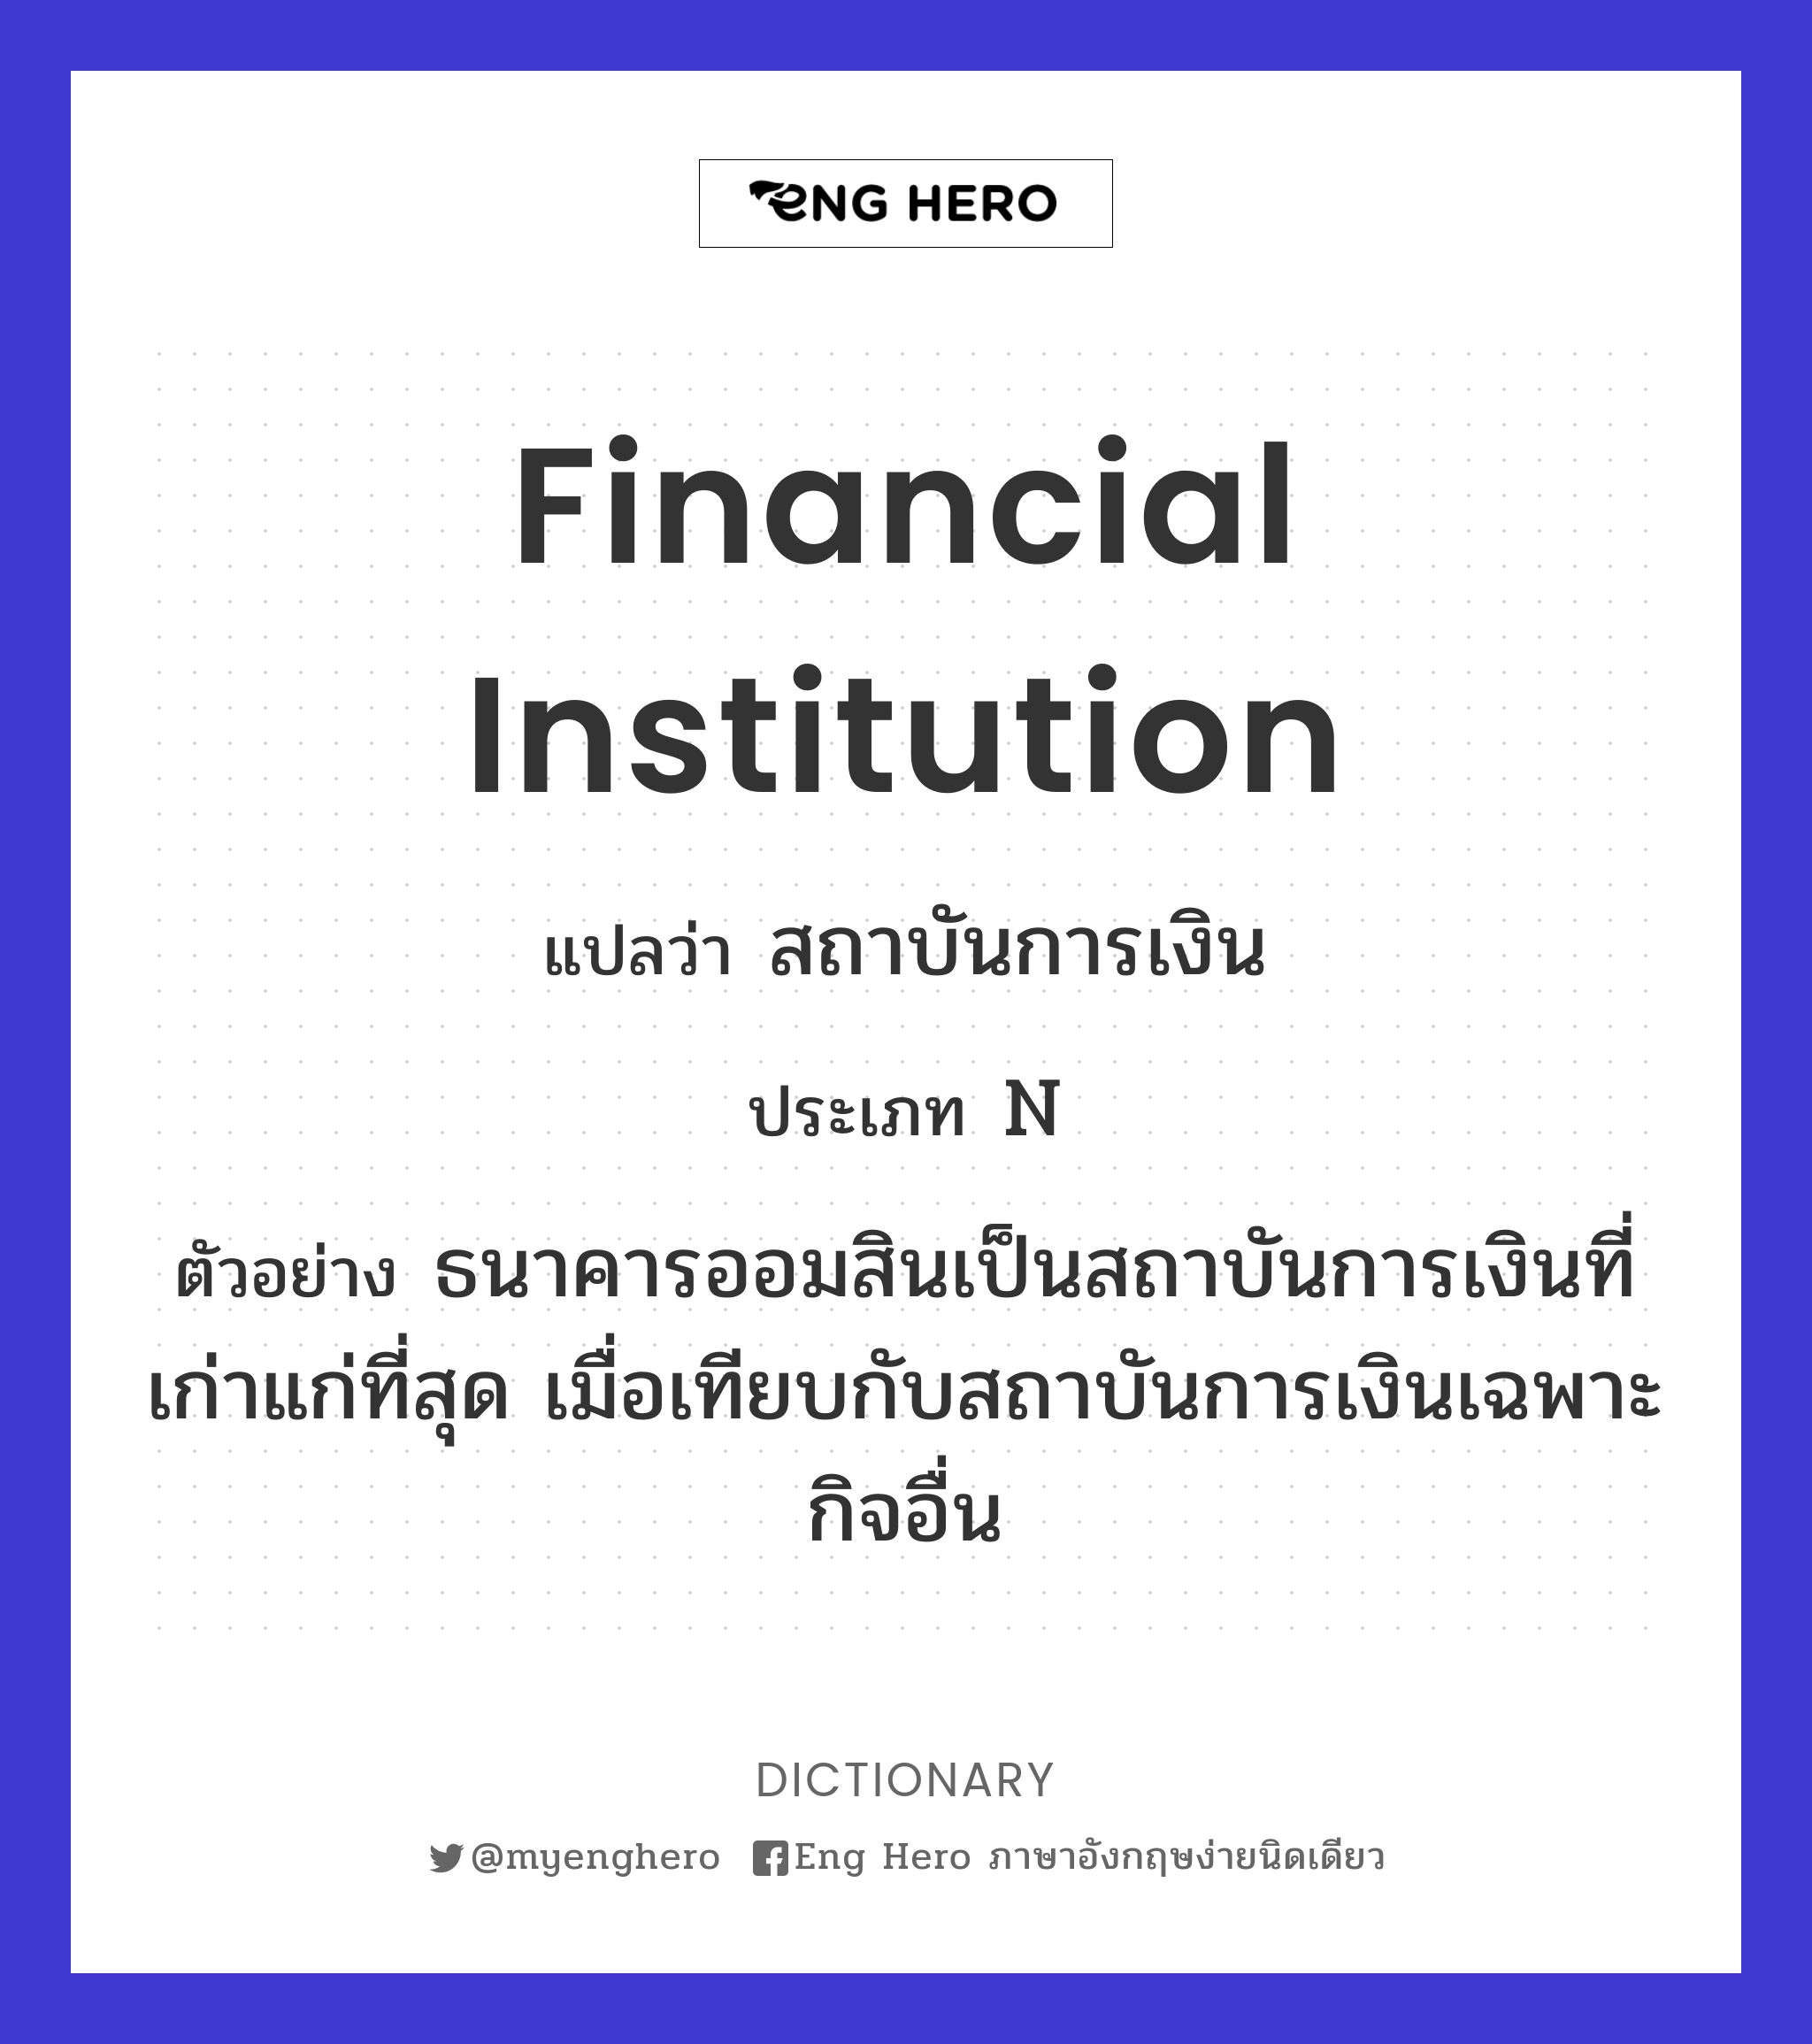 financial institution